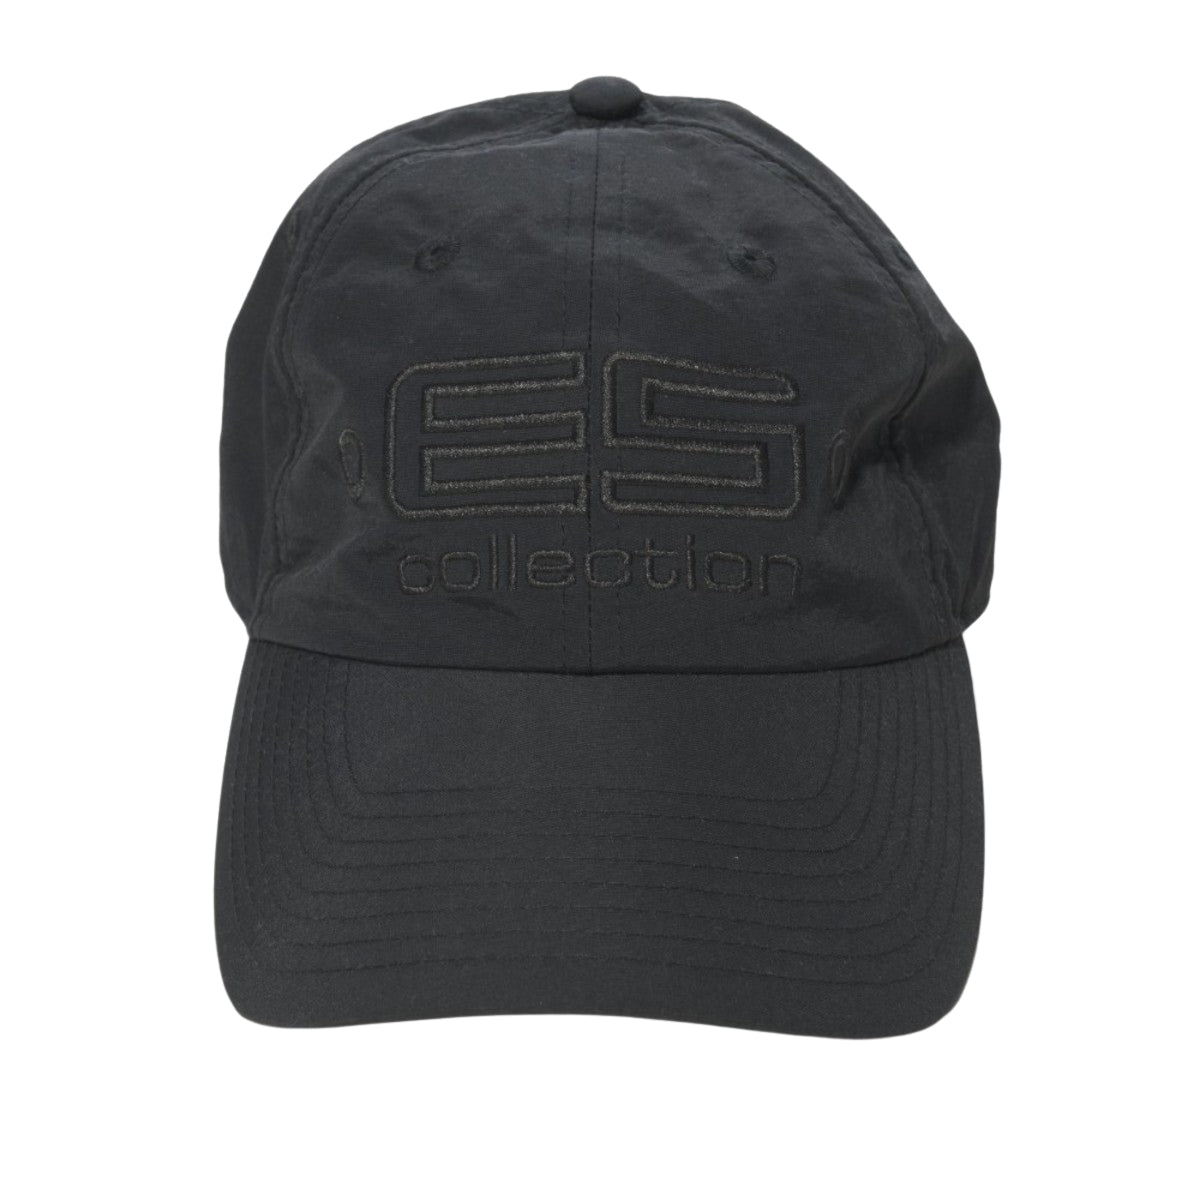 ES Collection Embroidered Baseball Cap Black CAP002